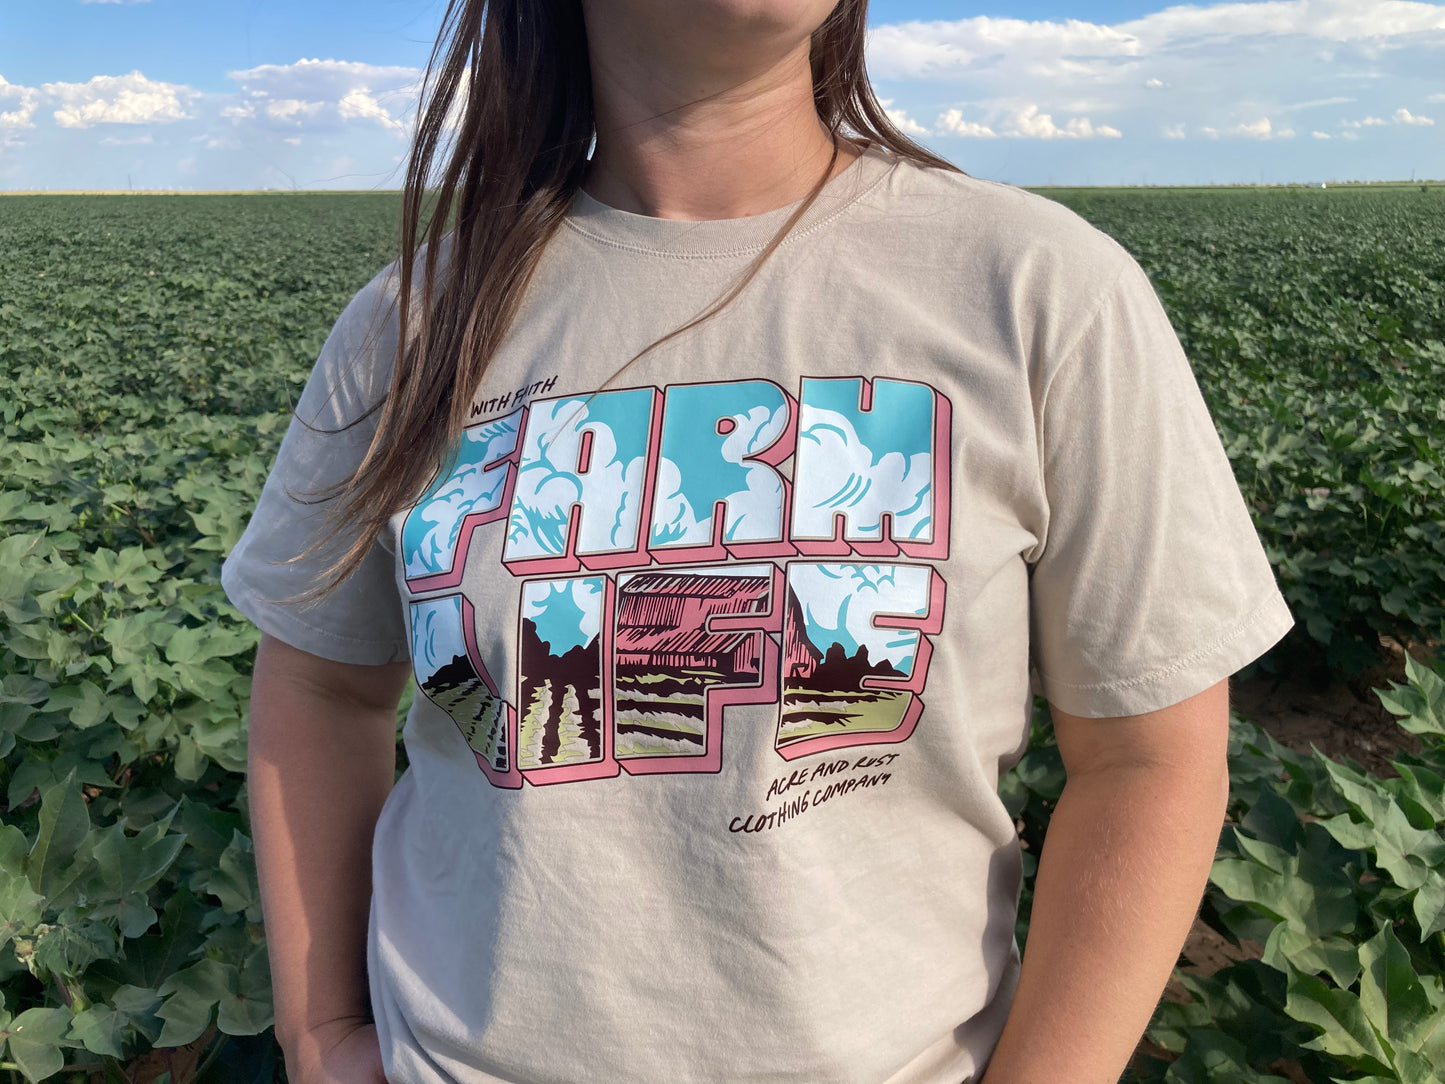 Farm Life T-Shirt